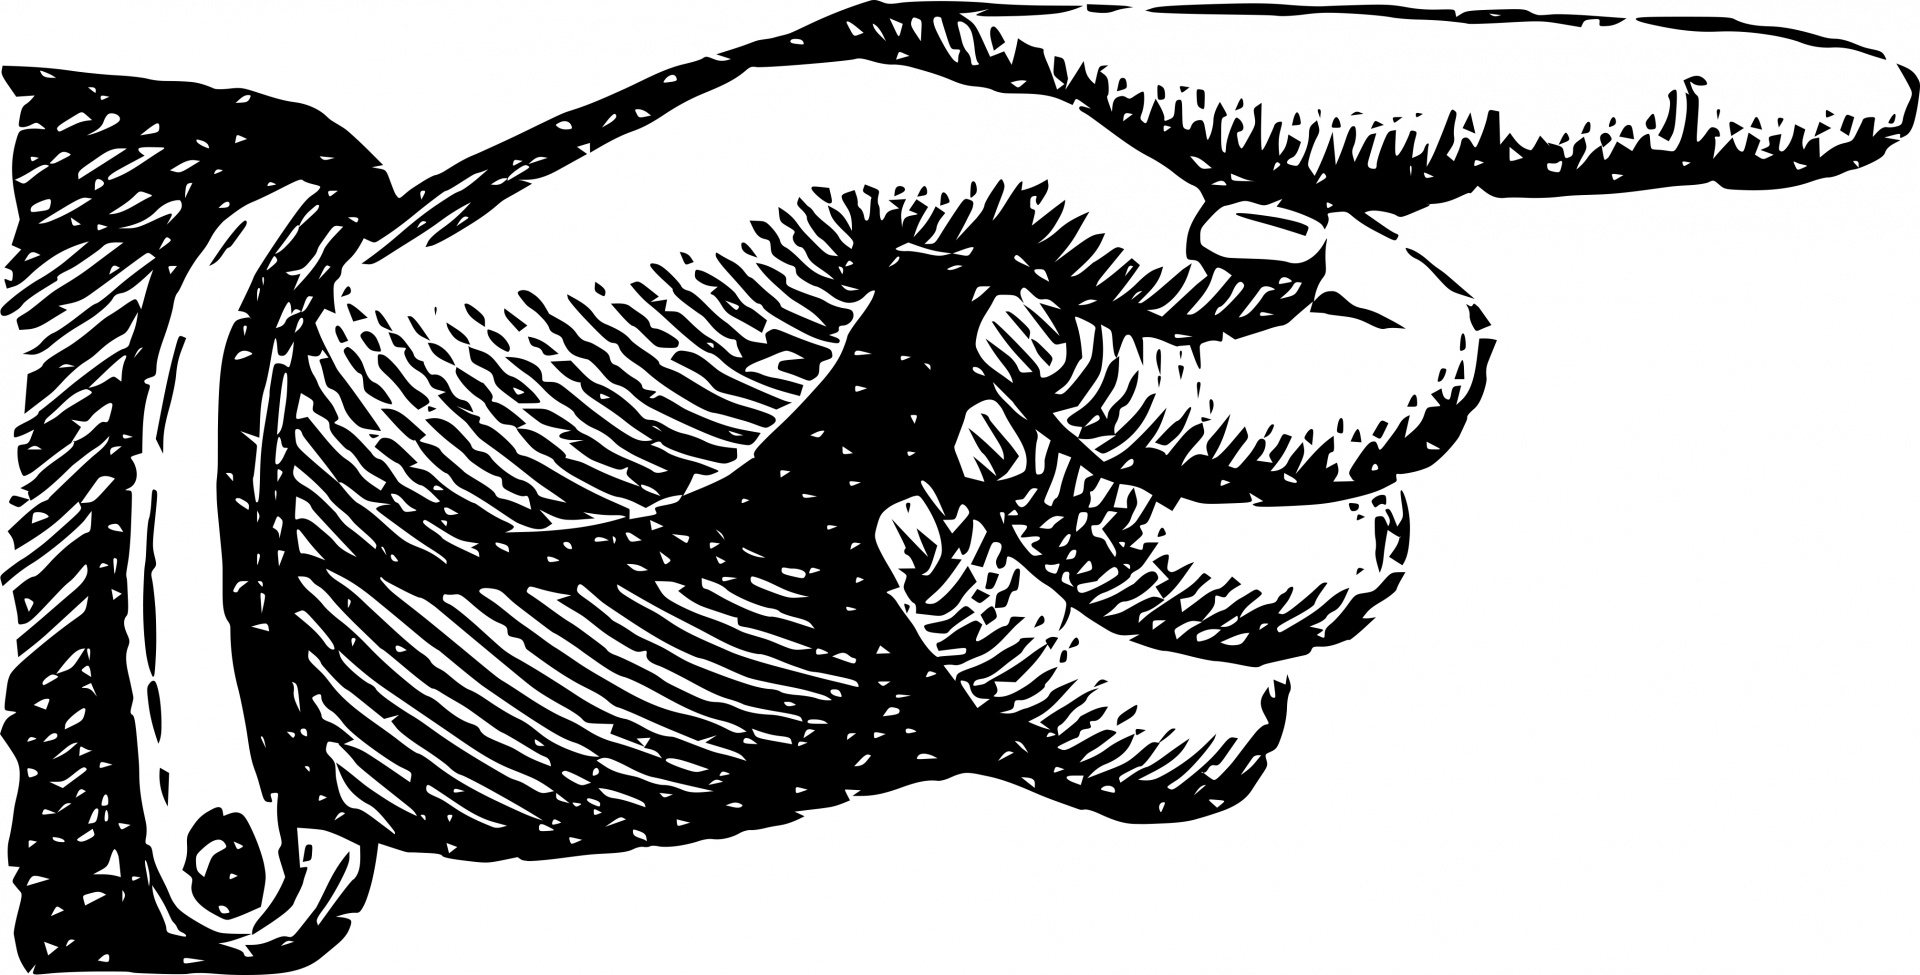 Pekande finger Gratis Stock Bild - Public Domain Pictures